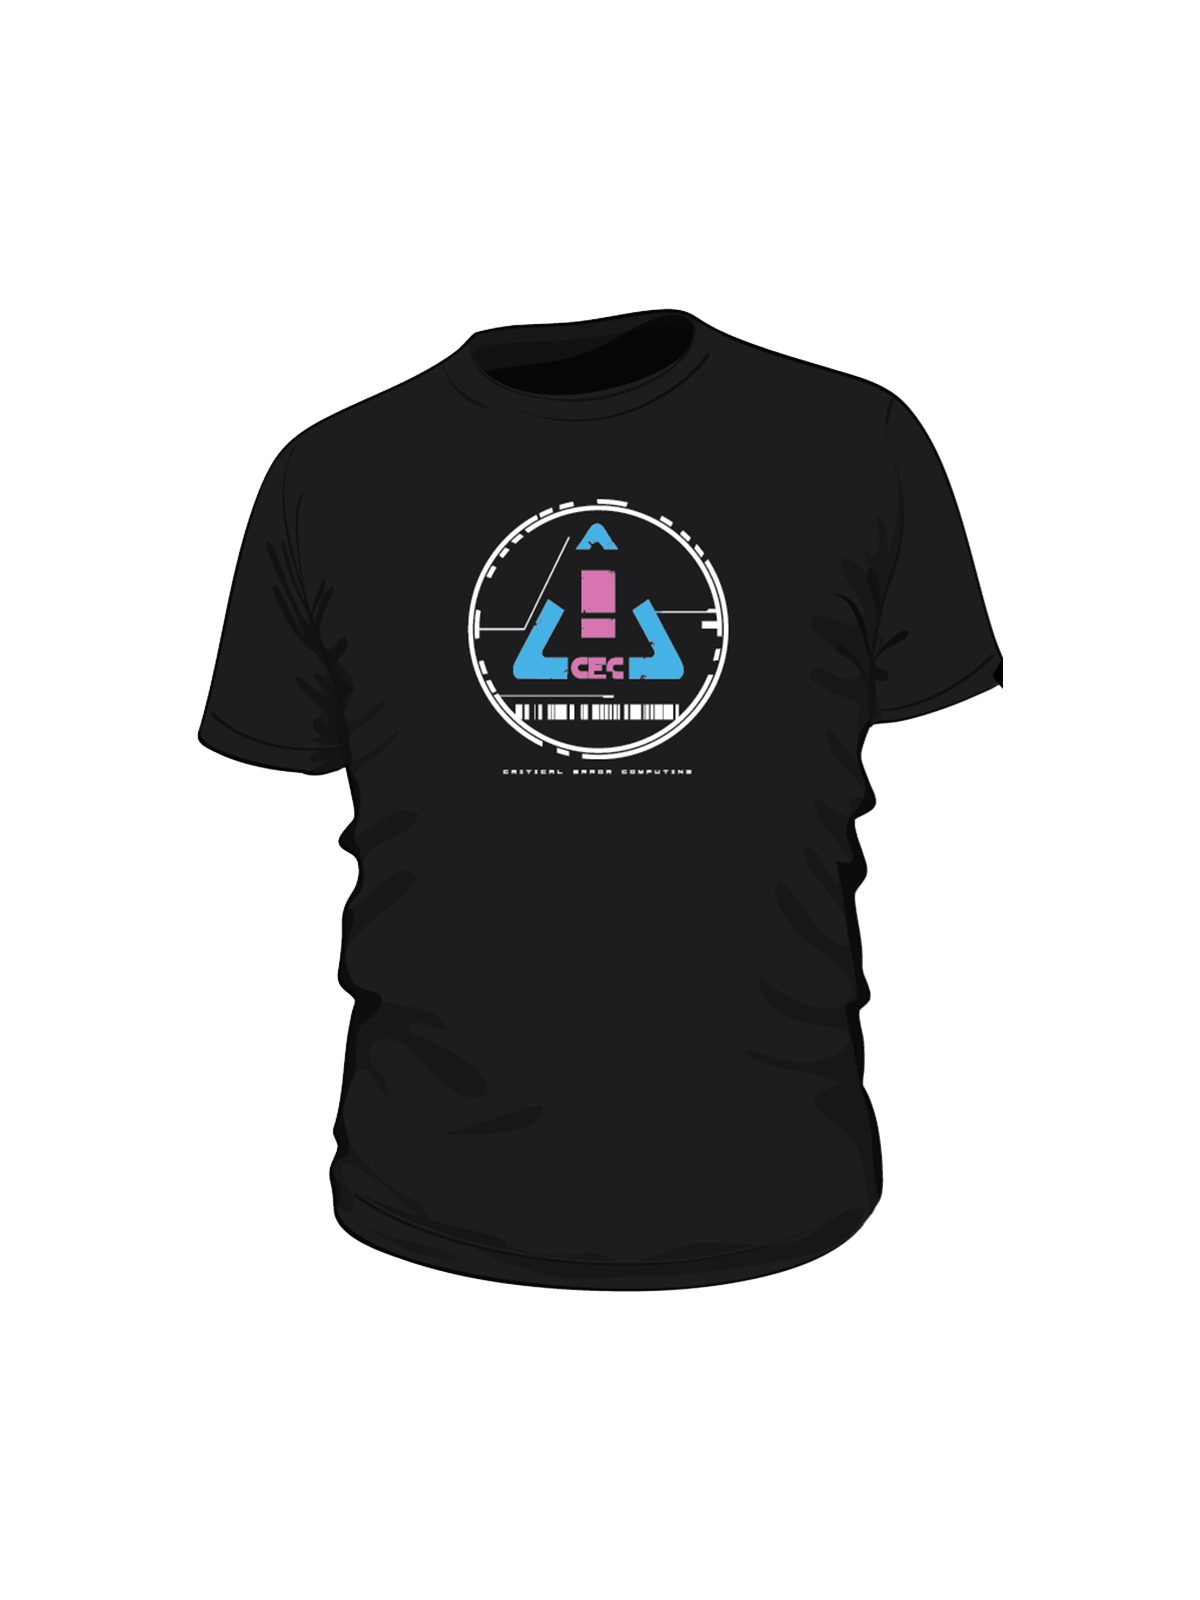 CEC T-Shirt (Design #1)